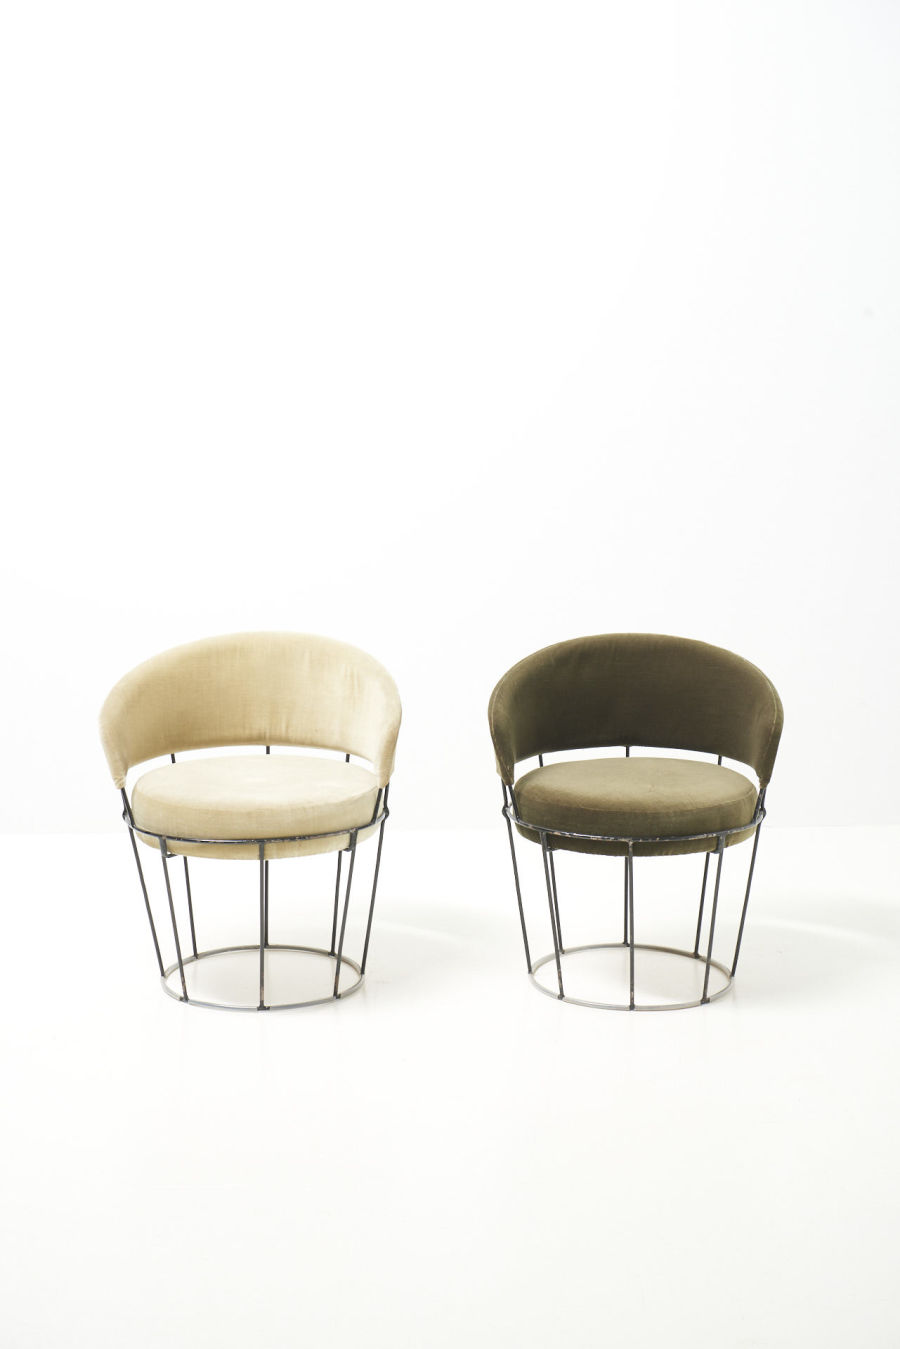 modestfurniture-vintage-2338-wireframe-cocktail-chairs02